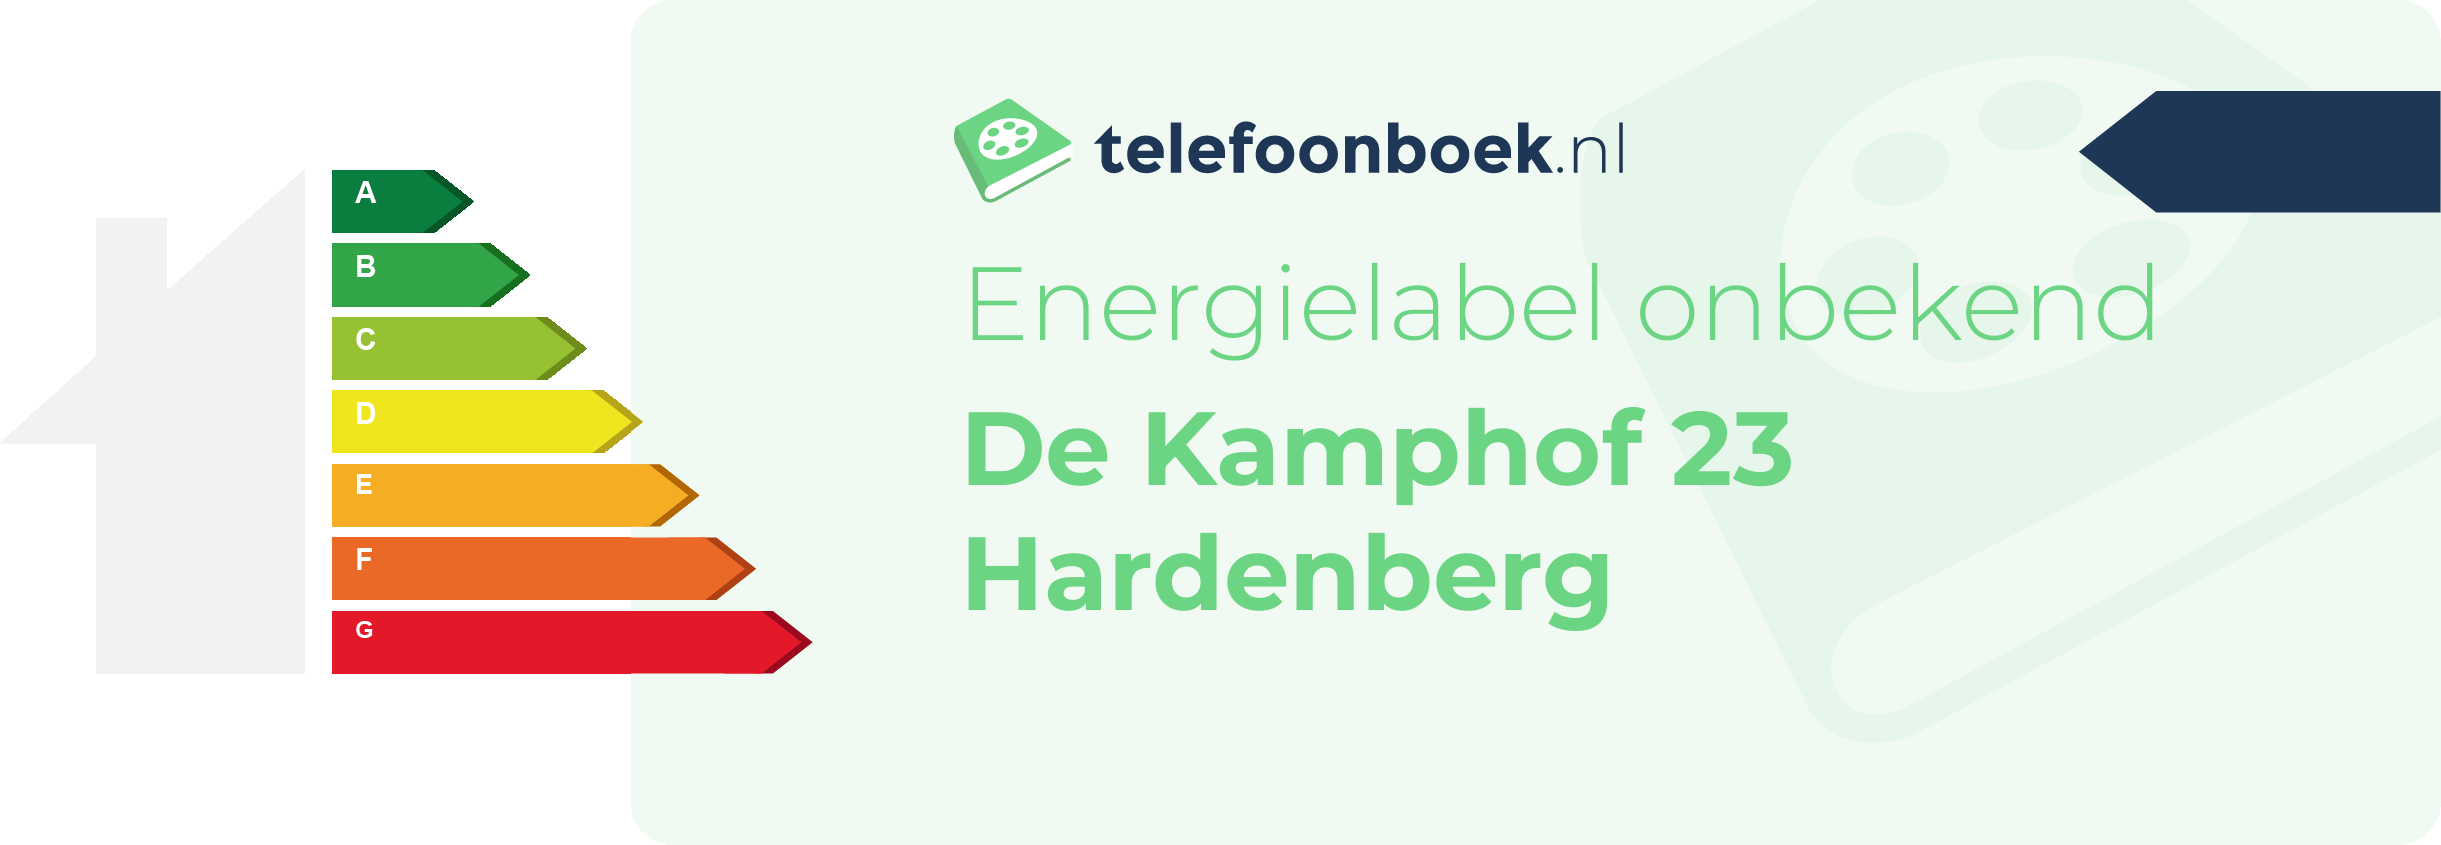 Energielabel De Kamphof 23 Hardenberg